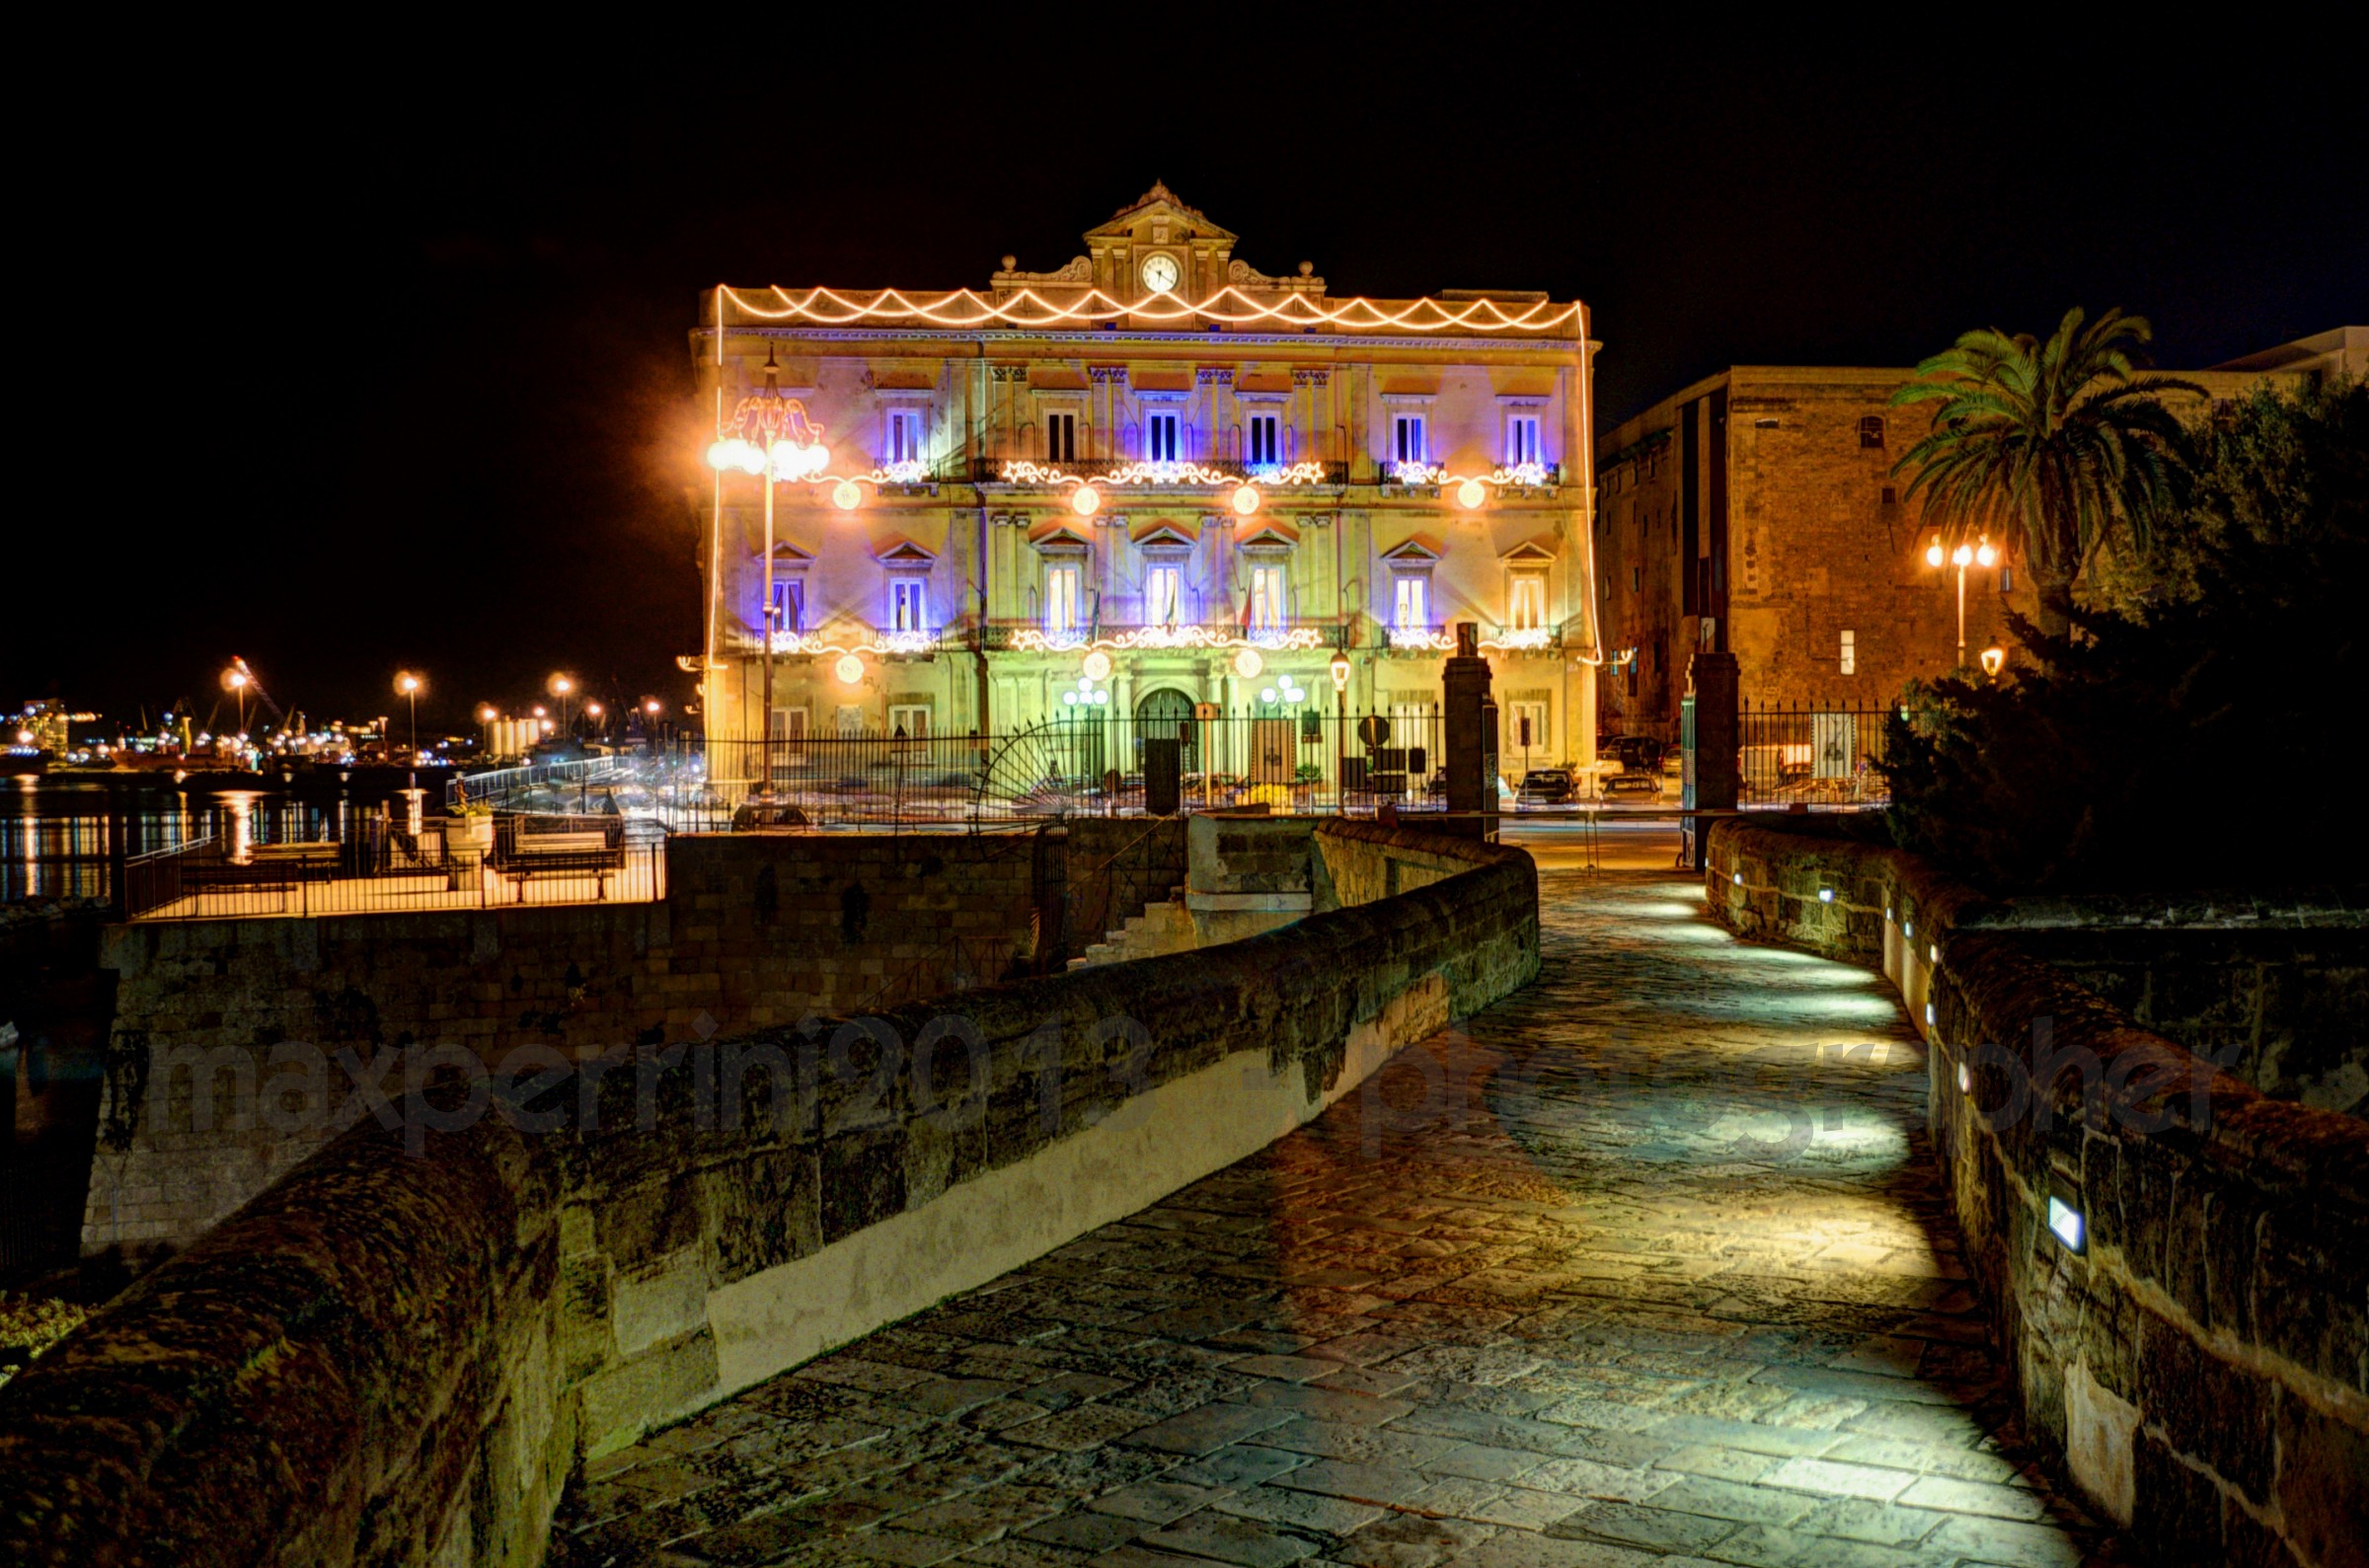 The Lights of Christmas in Taranto...